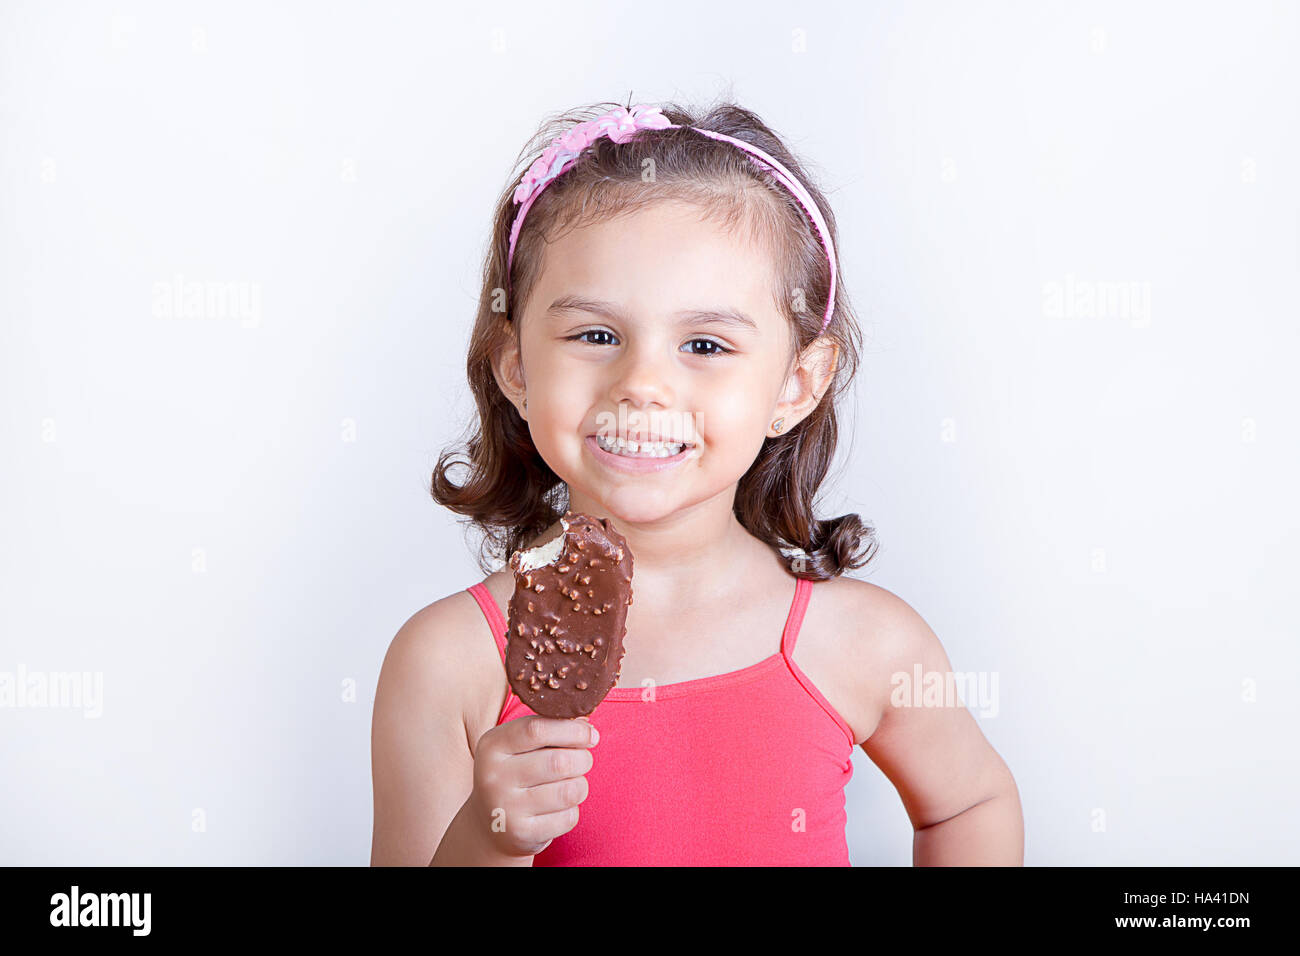 Young girl feeling happy while eating chocolate ice cream bar Stock Photo